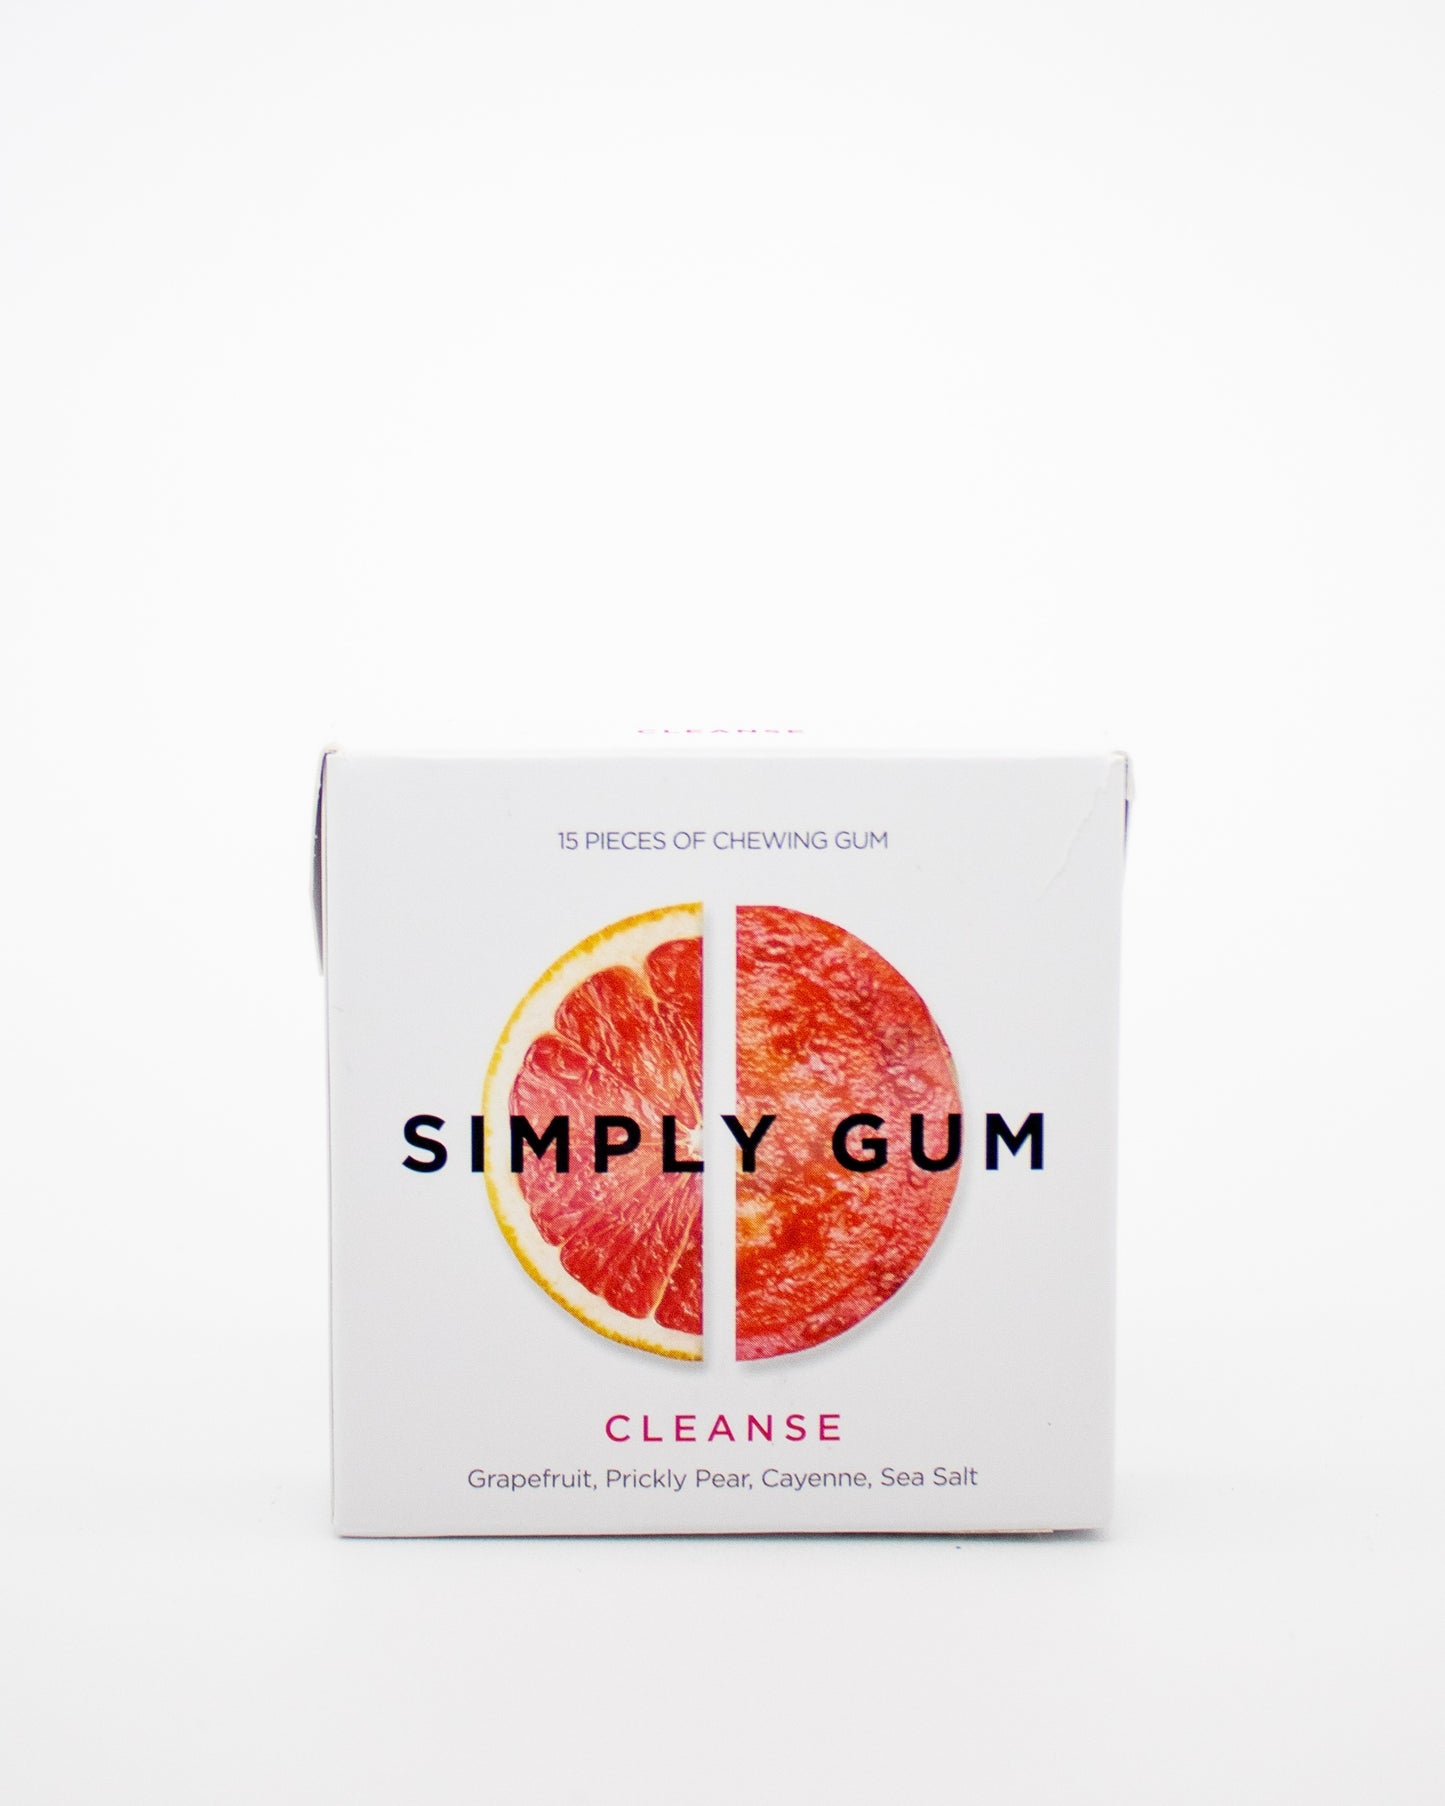 Simply Gum - Cleanse